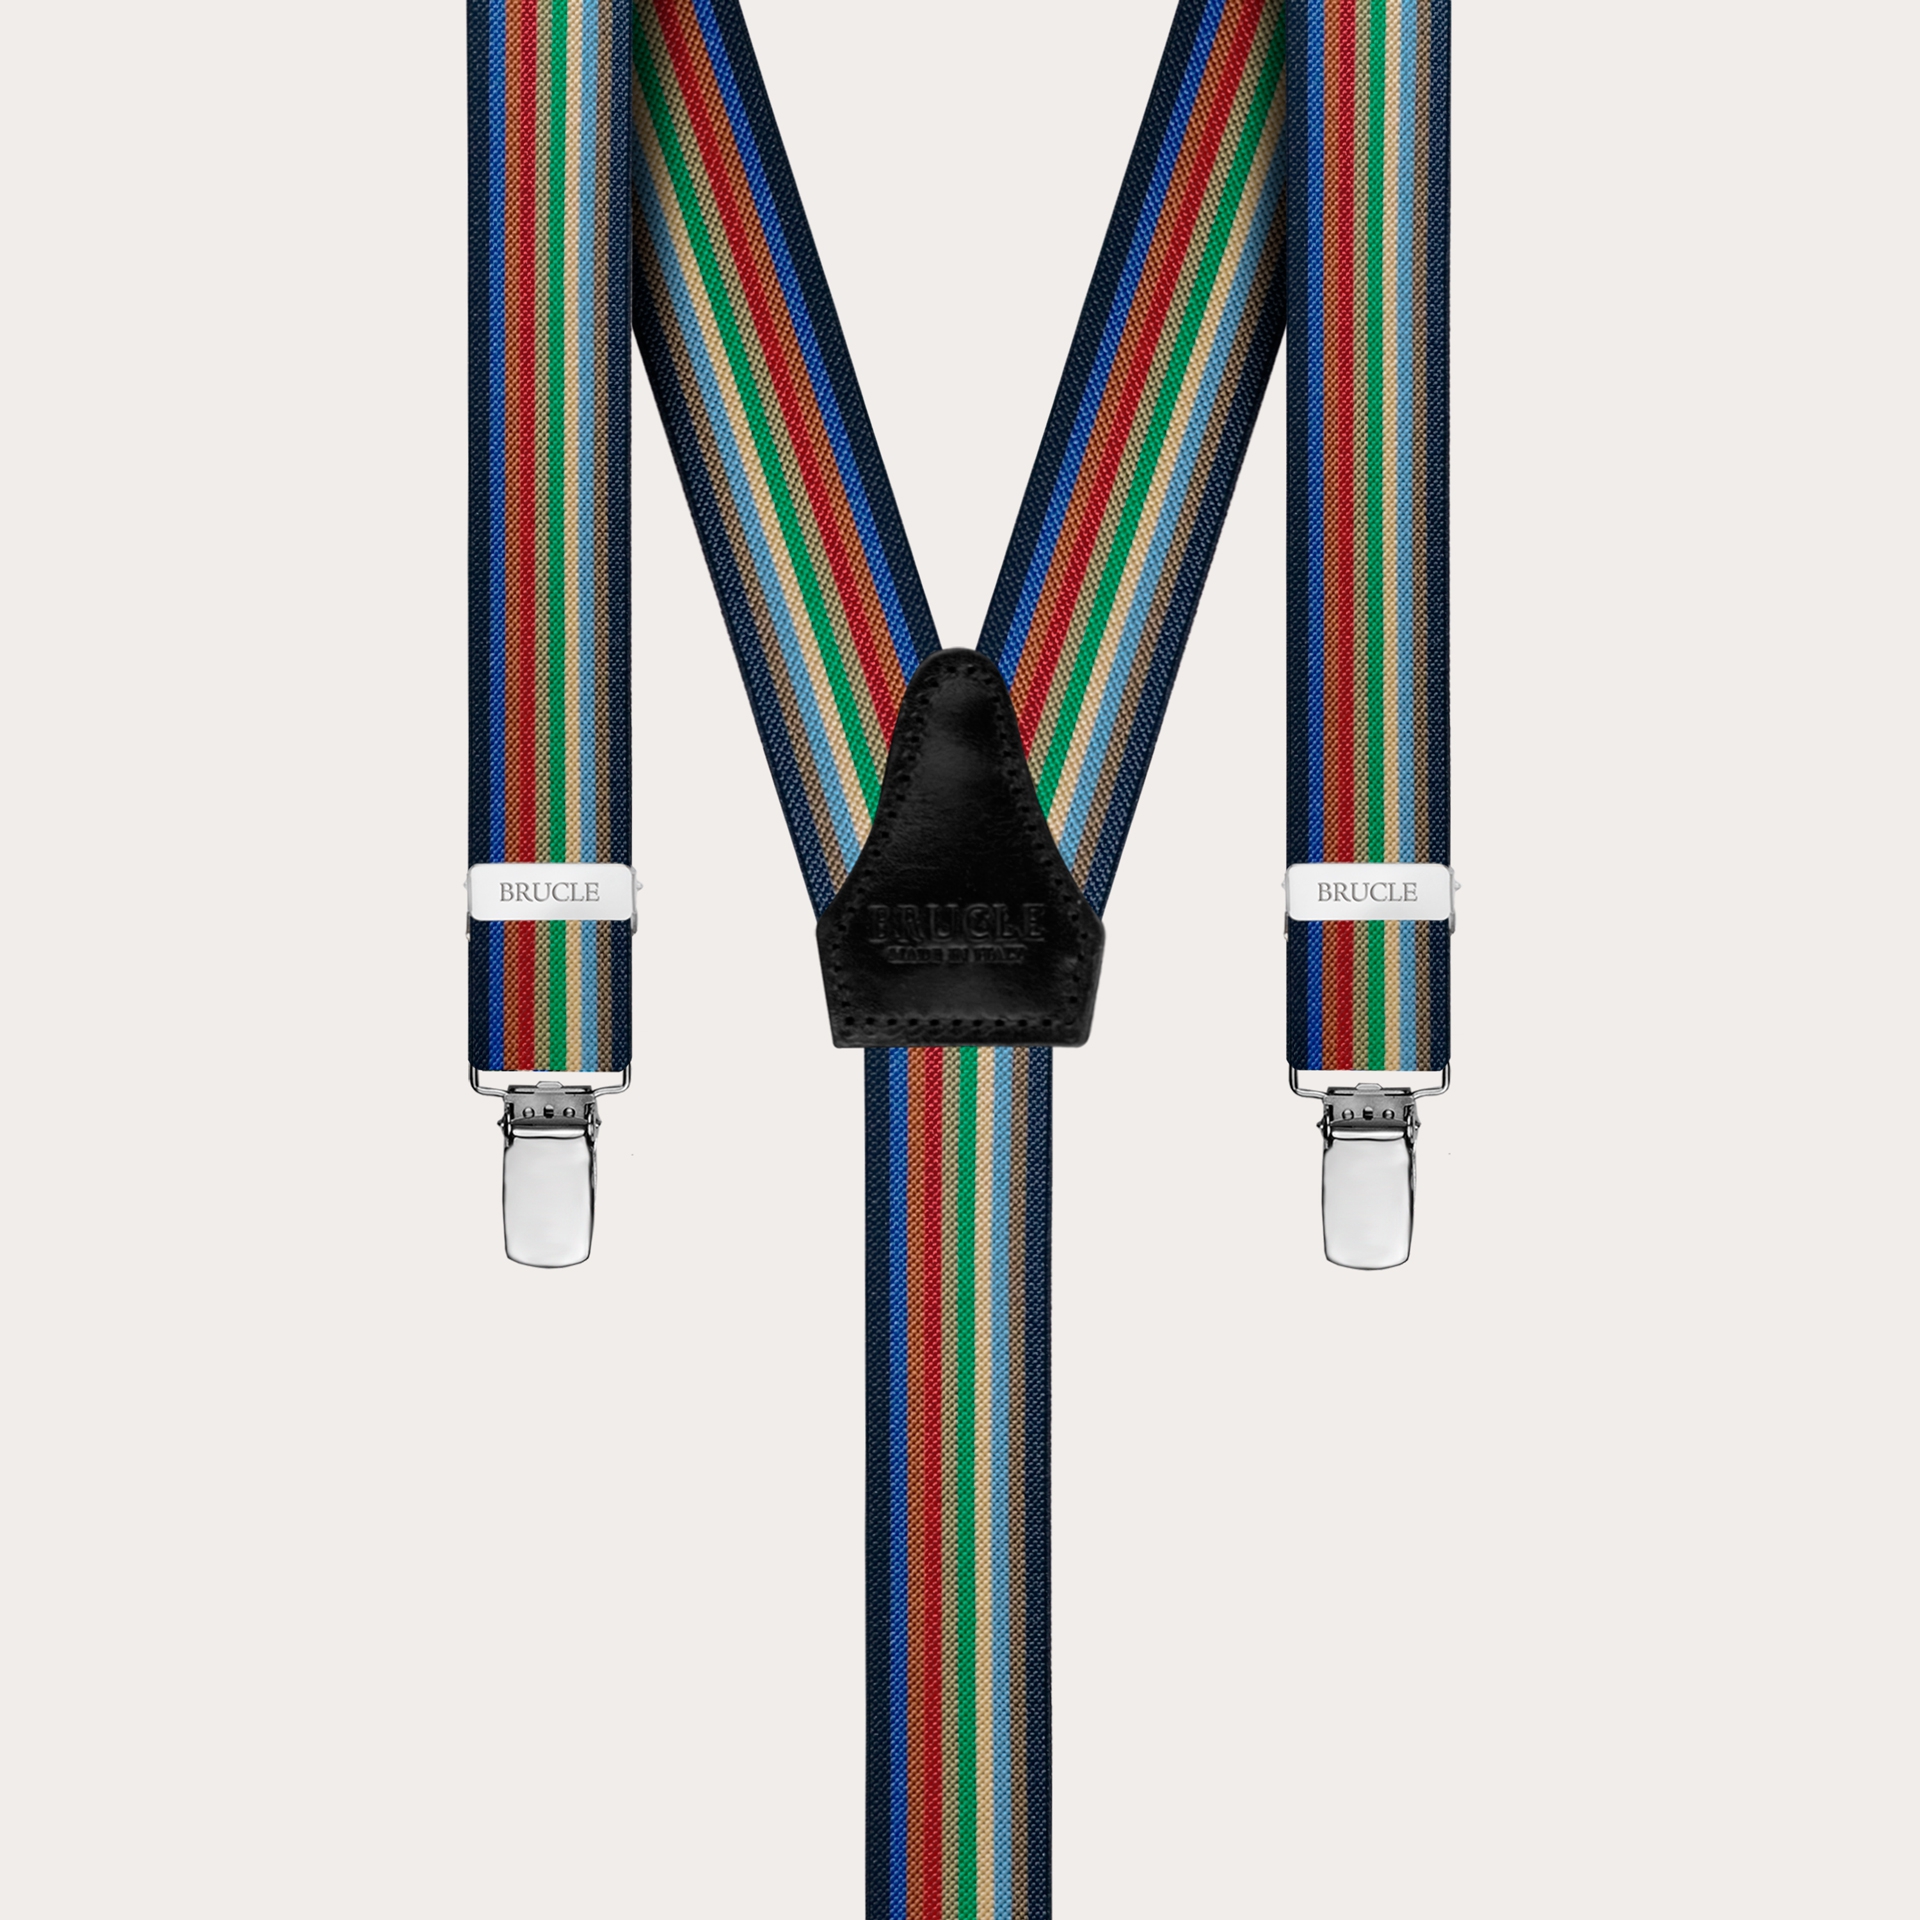 brucle braces suspenders rainbow striped